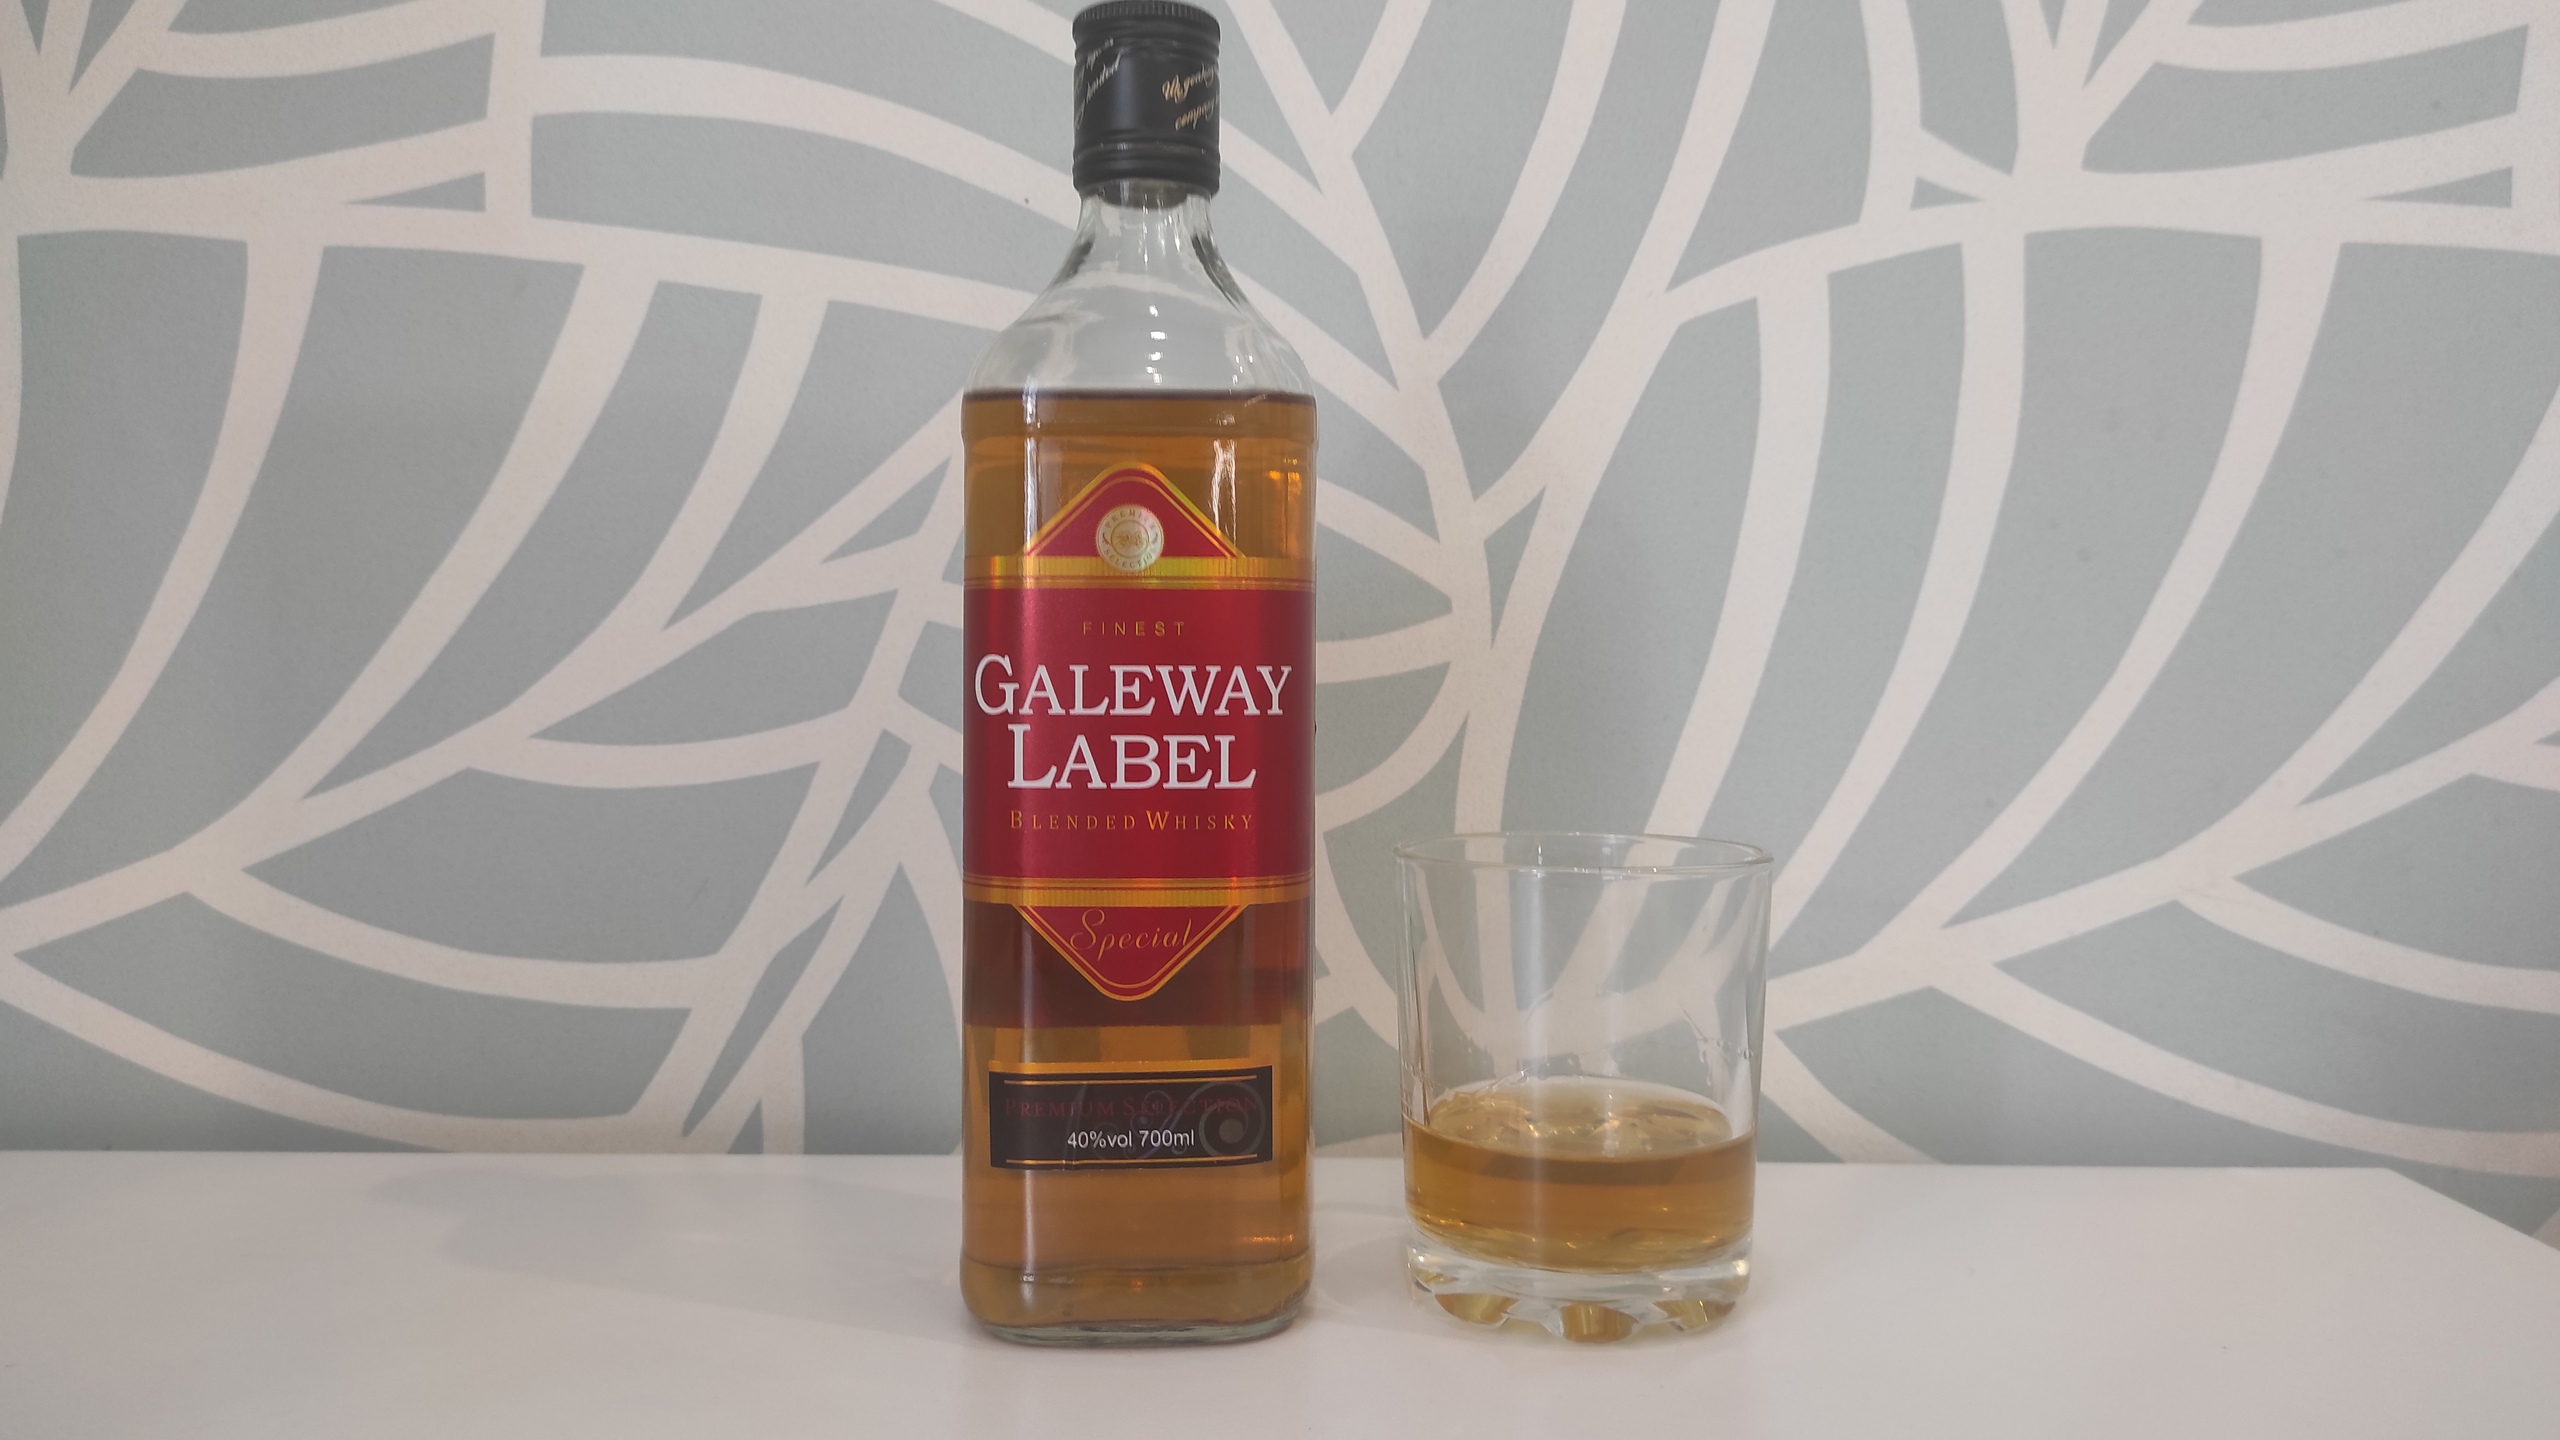 Royal glenvart 0.7. Китайский виски. Galeway Label. Китайский виски Джон Винтон. Виски би.